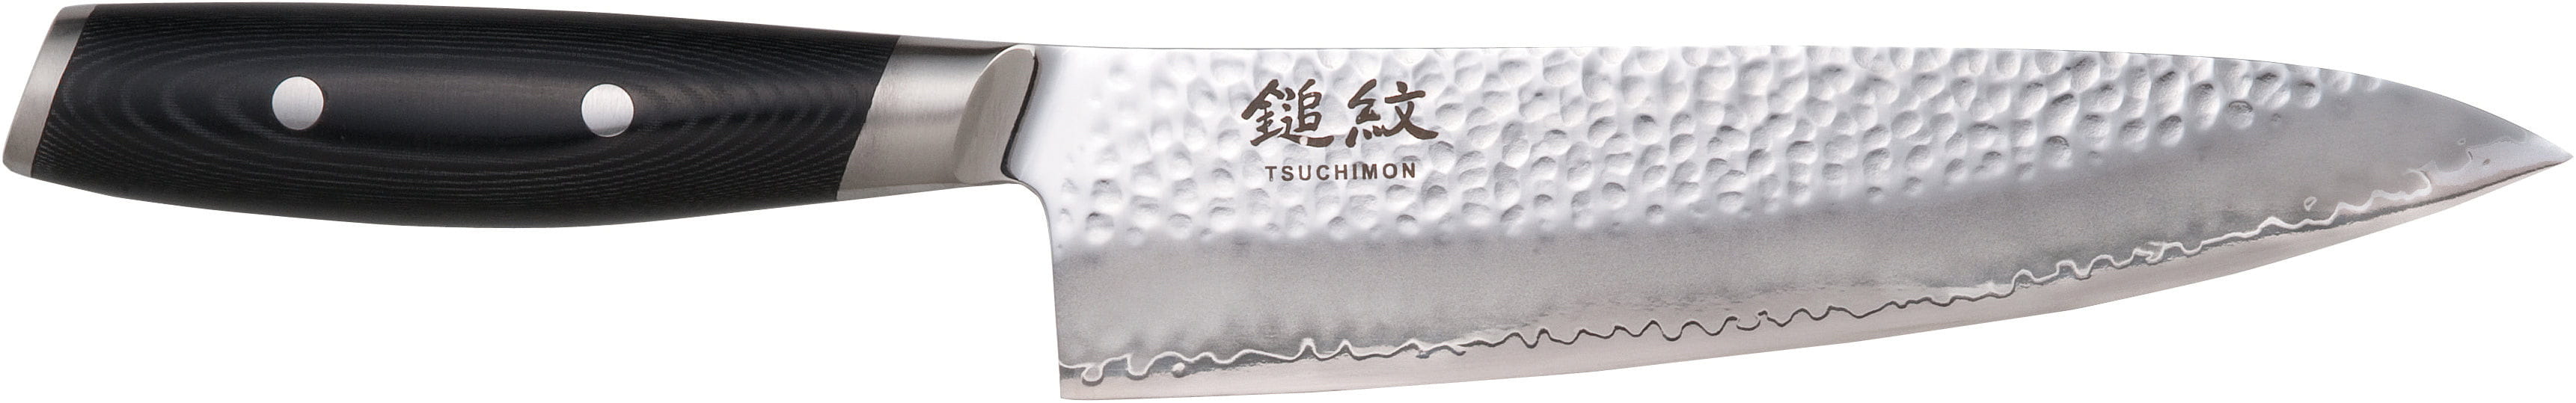 Yaxell Tsuchimon Chef's Messer, 20 cm